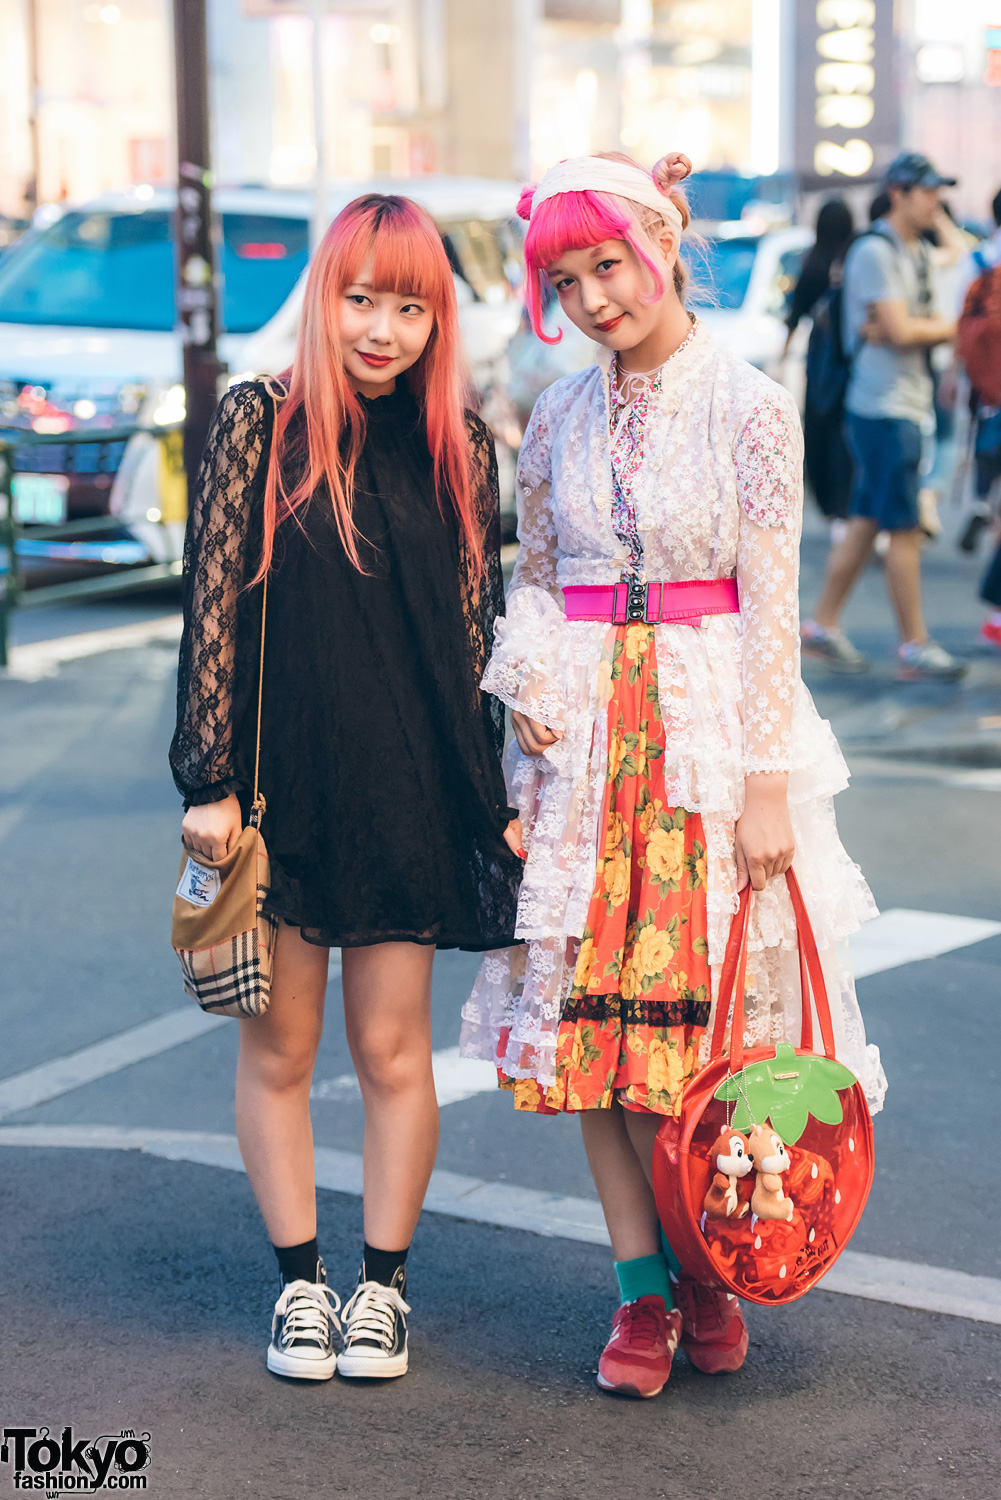 Harajuku Girls in Lace & Mixed Print Street Styles w/ Kinji, Swimmer, Converse, Burberry & New Balance